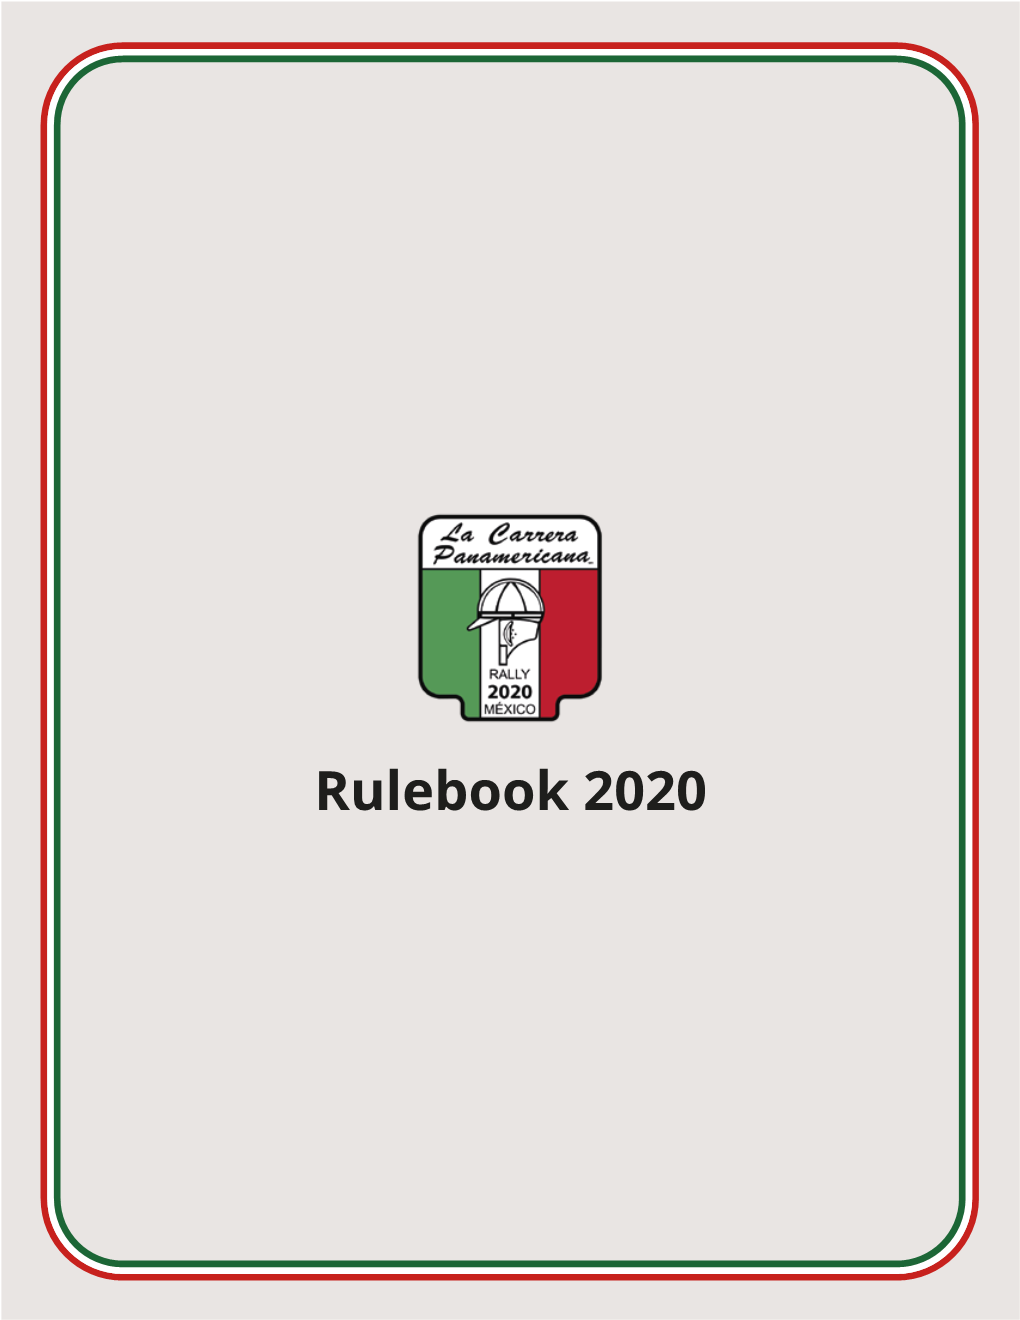 Rulebook 2020 La Carrera Panamericana RULE BOOK 2020